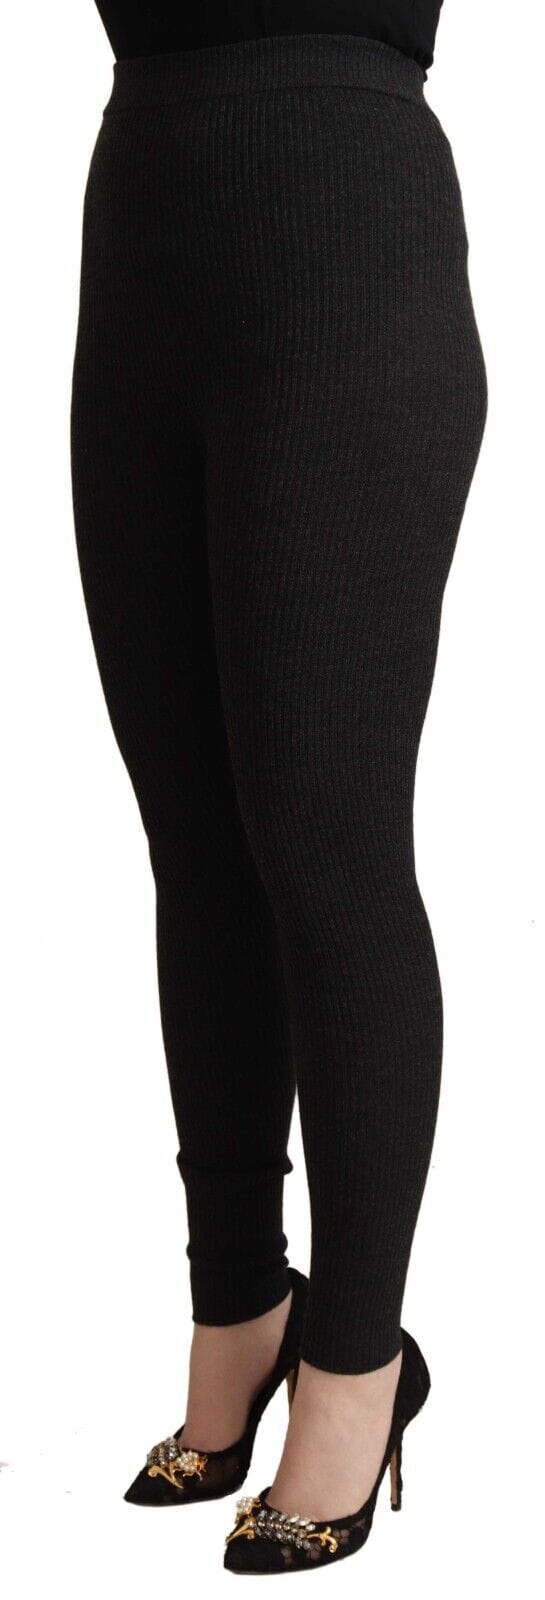 Black virgin wool stretch waist tights pants